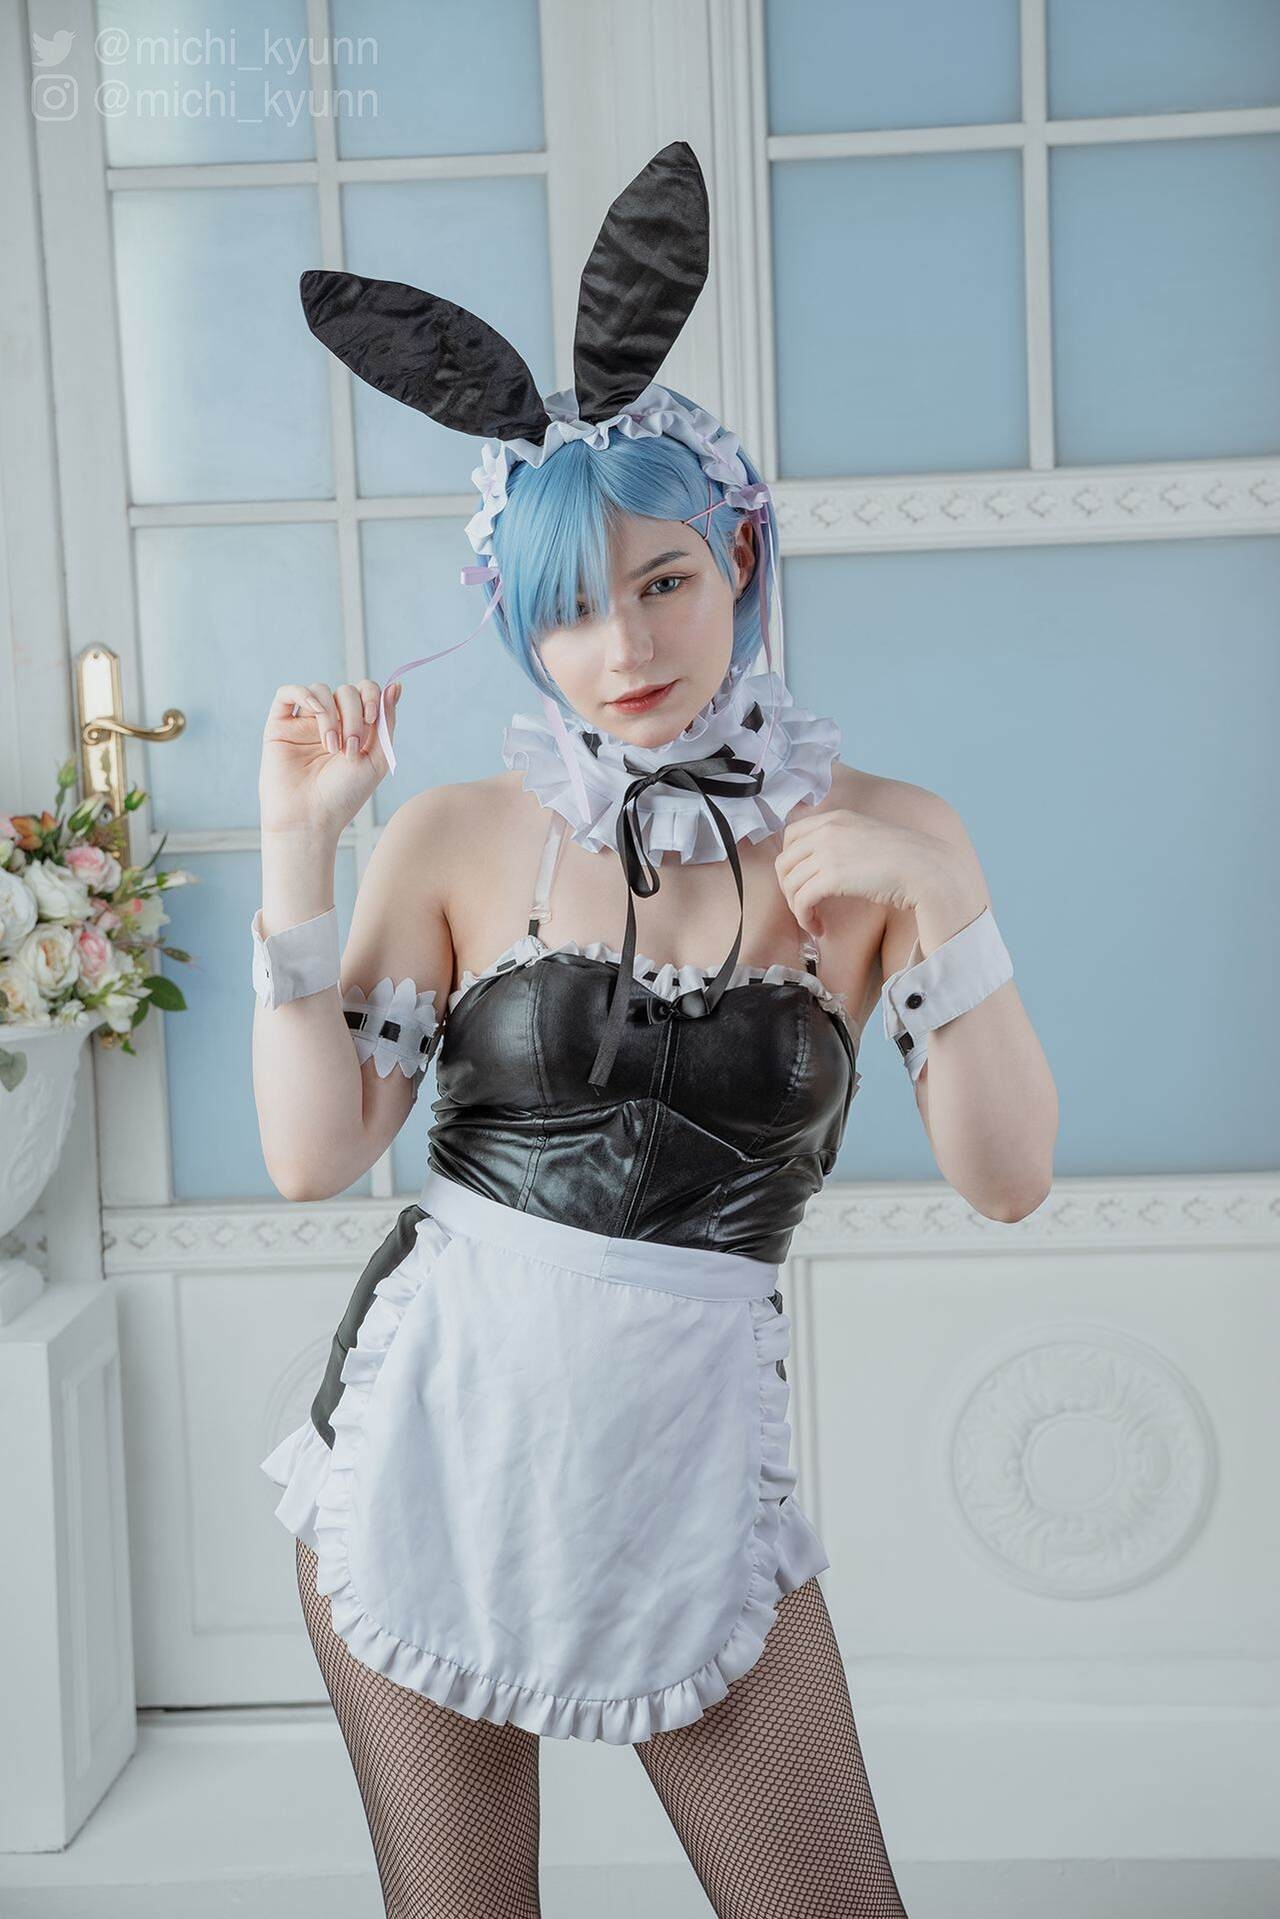 Michi Kyunn Rem Bunny Maid 5